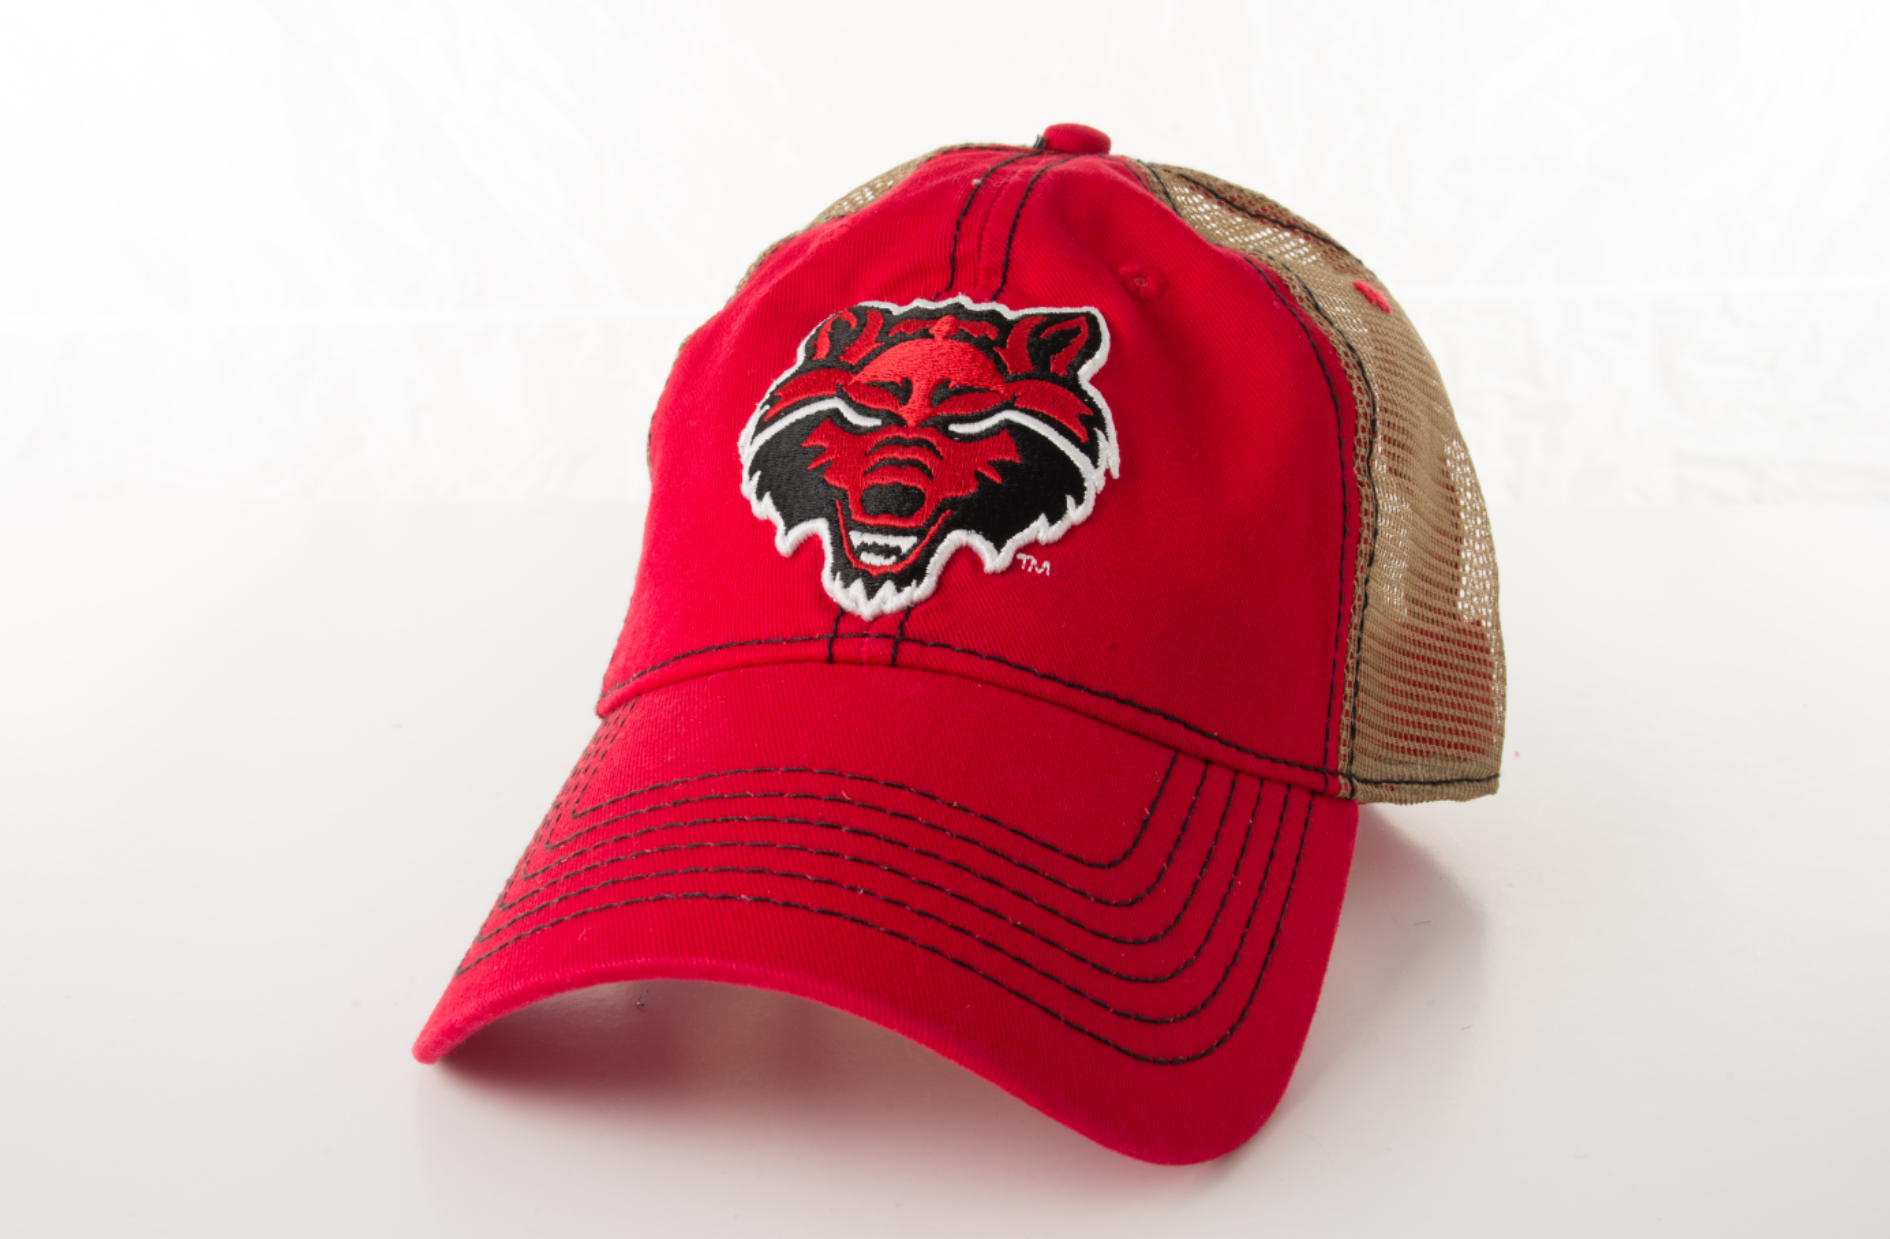 A-State Red & Tan mesh back cap